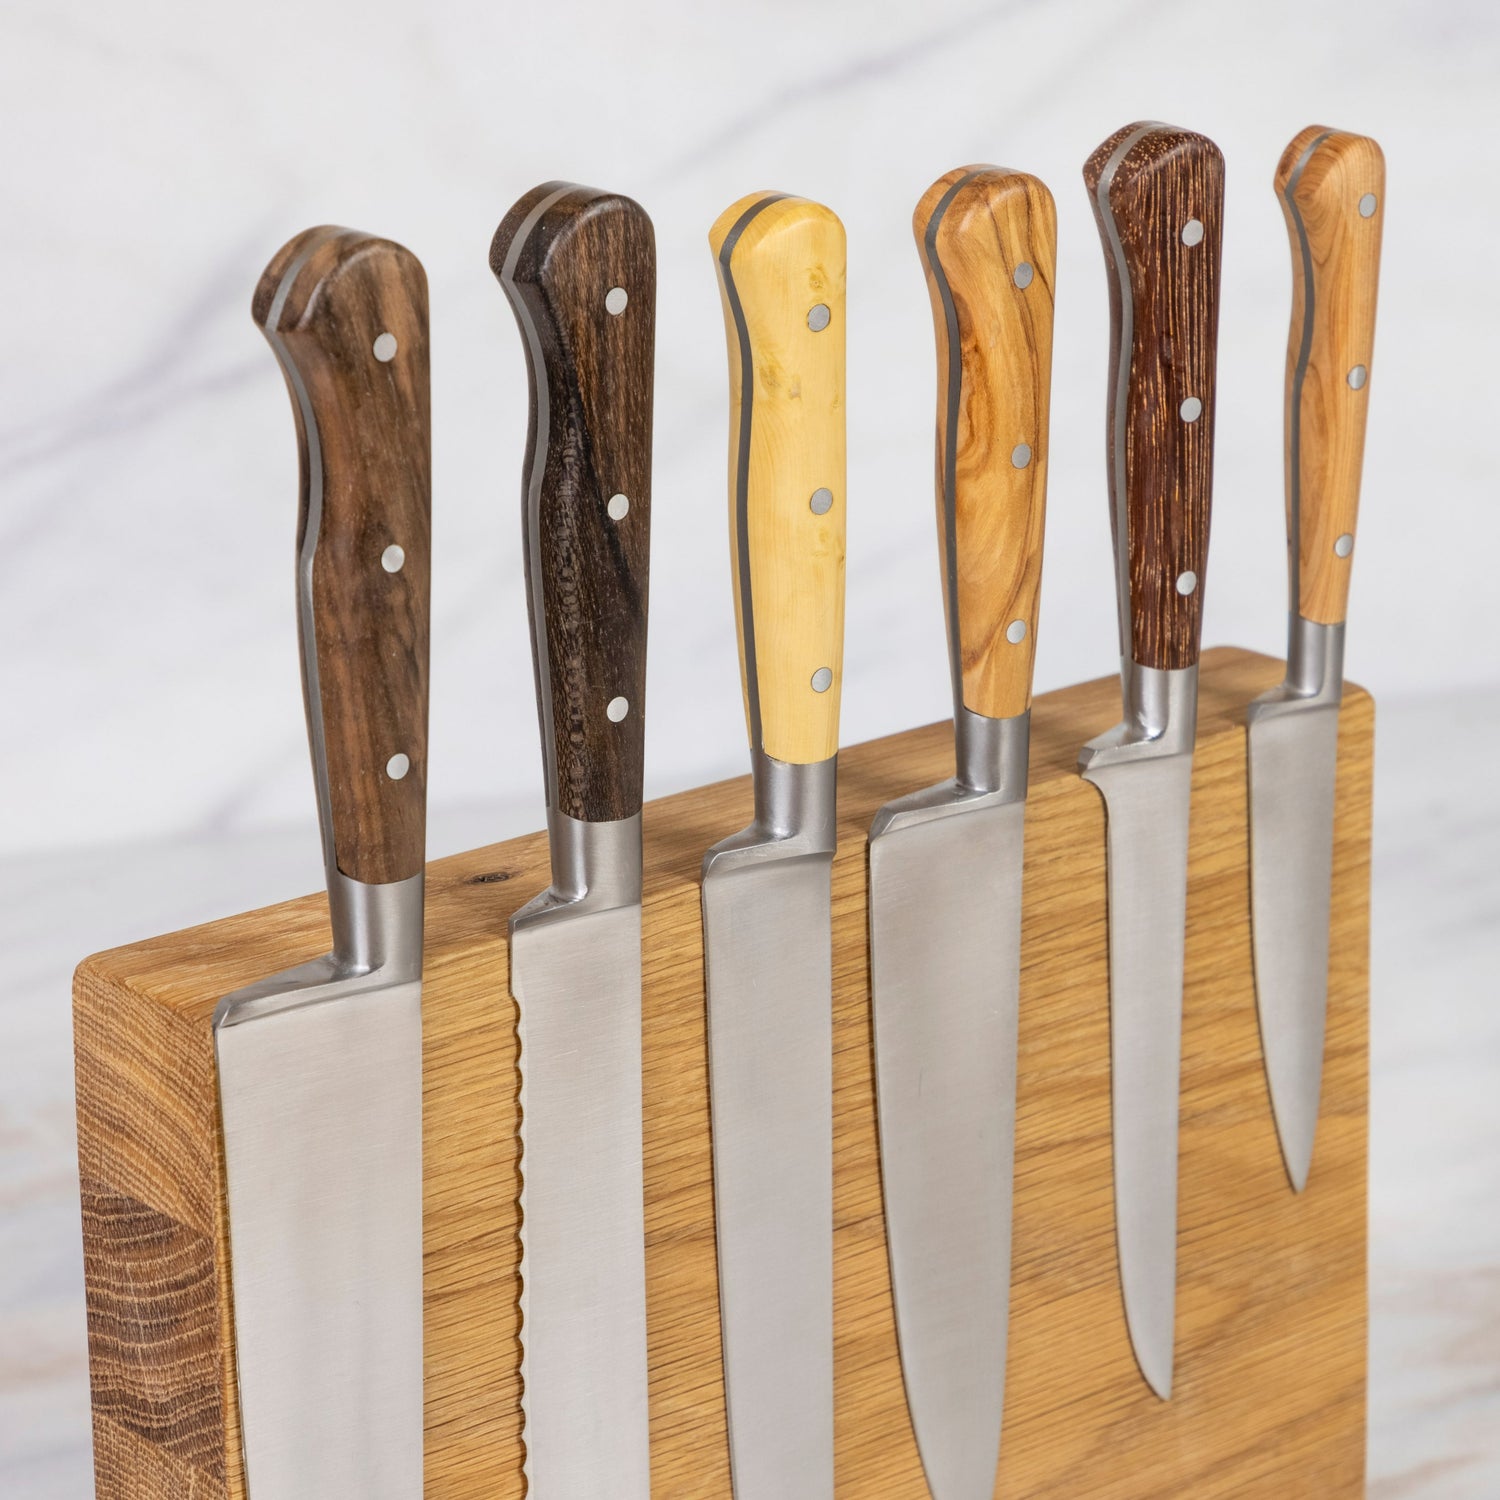 Laguiole en Aubrac Kitchen Knives with Oak Block, Set of 6, Mixed Wood